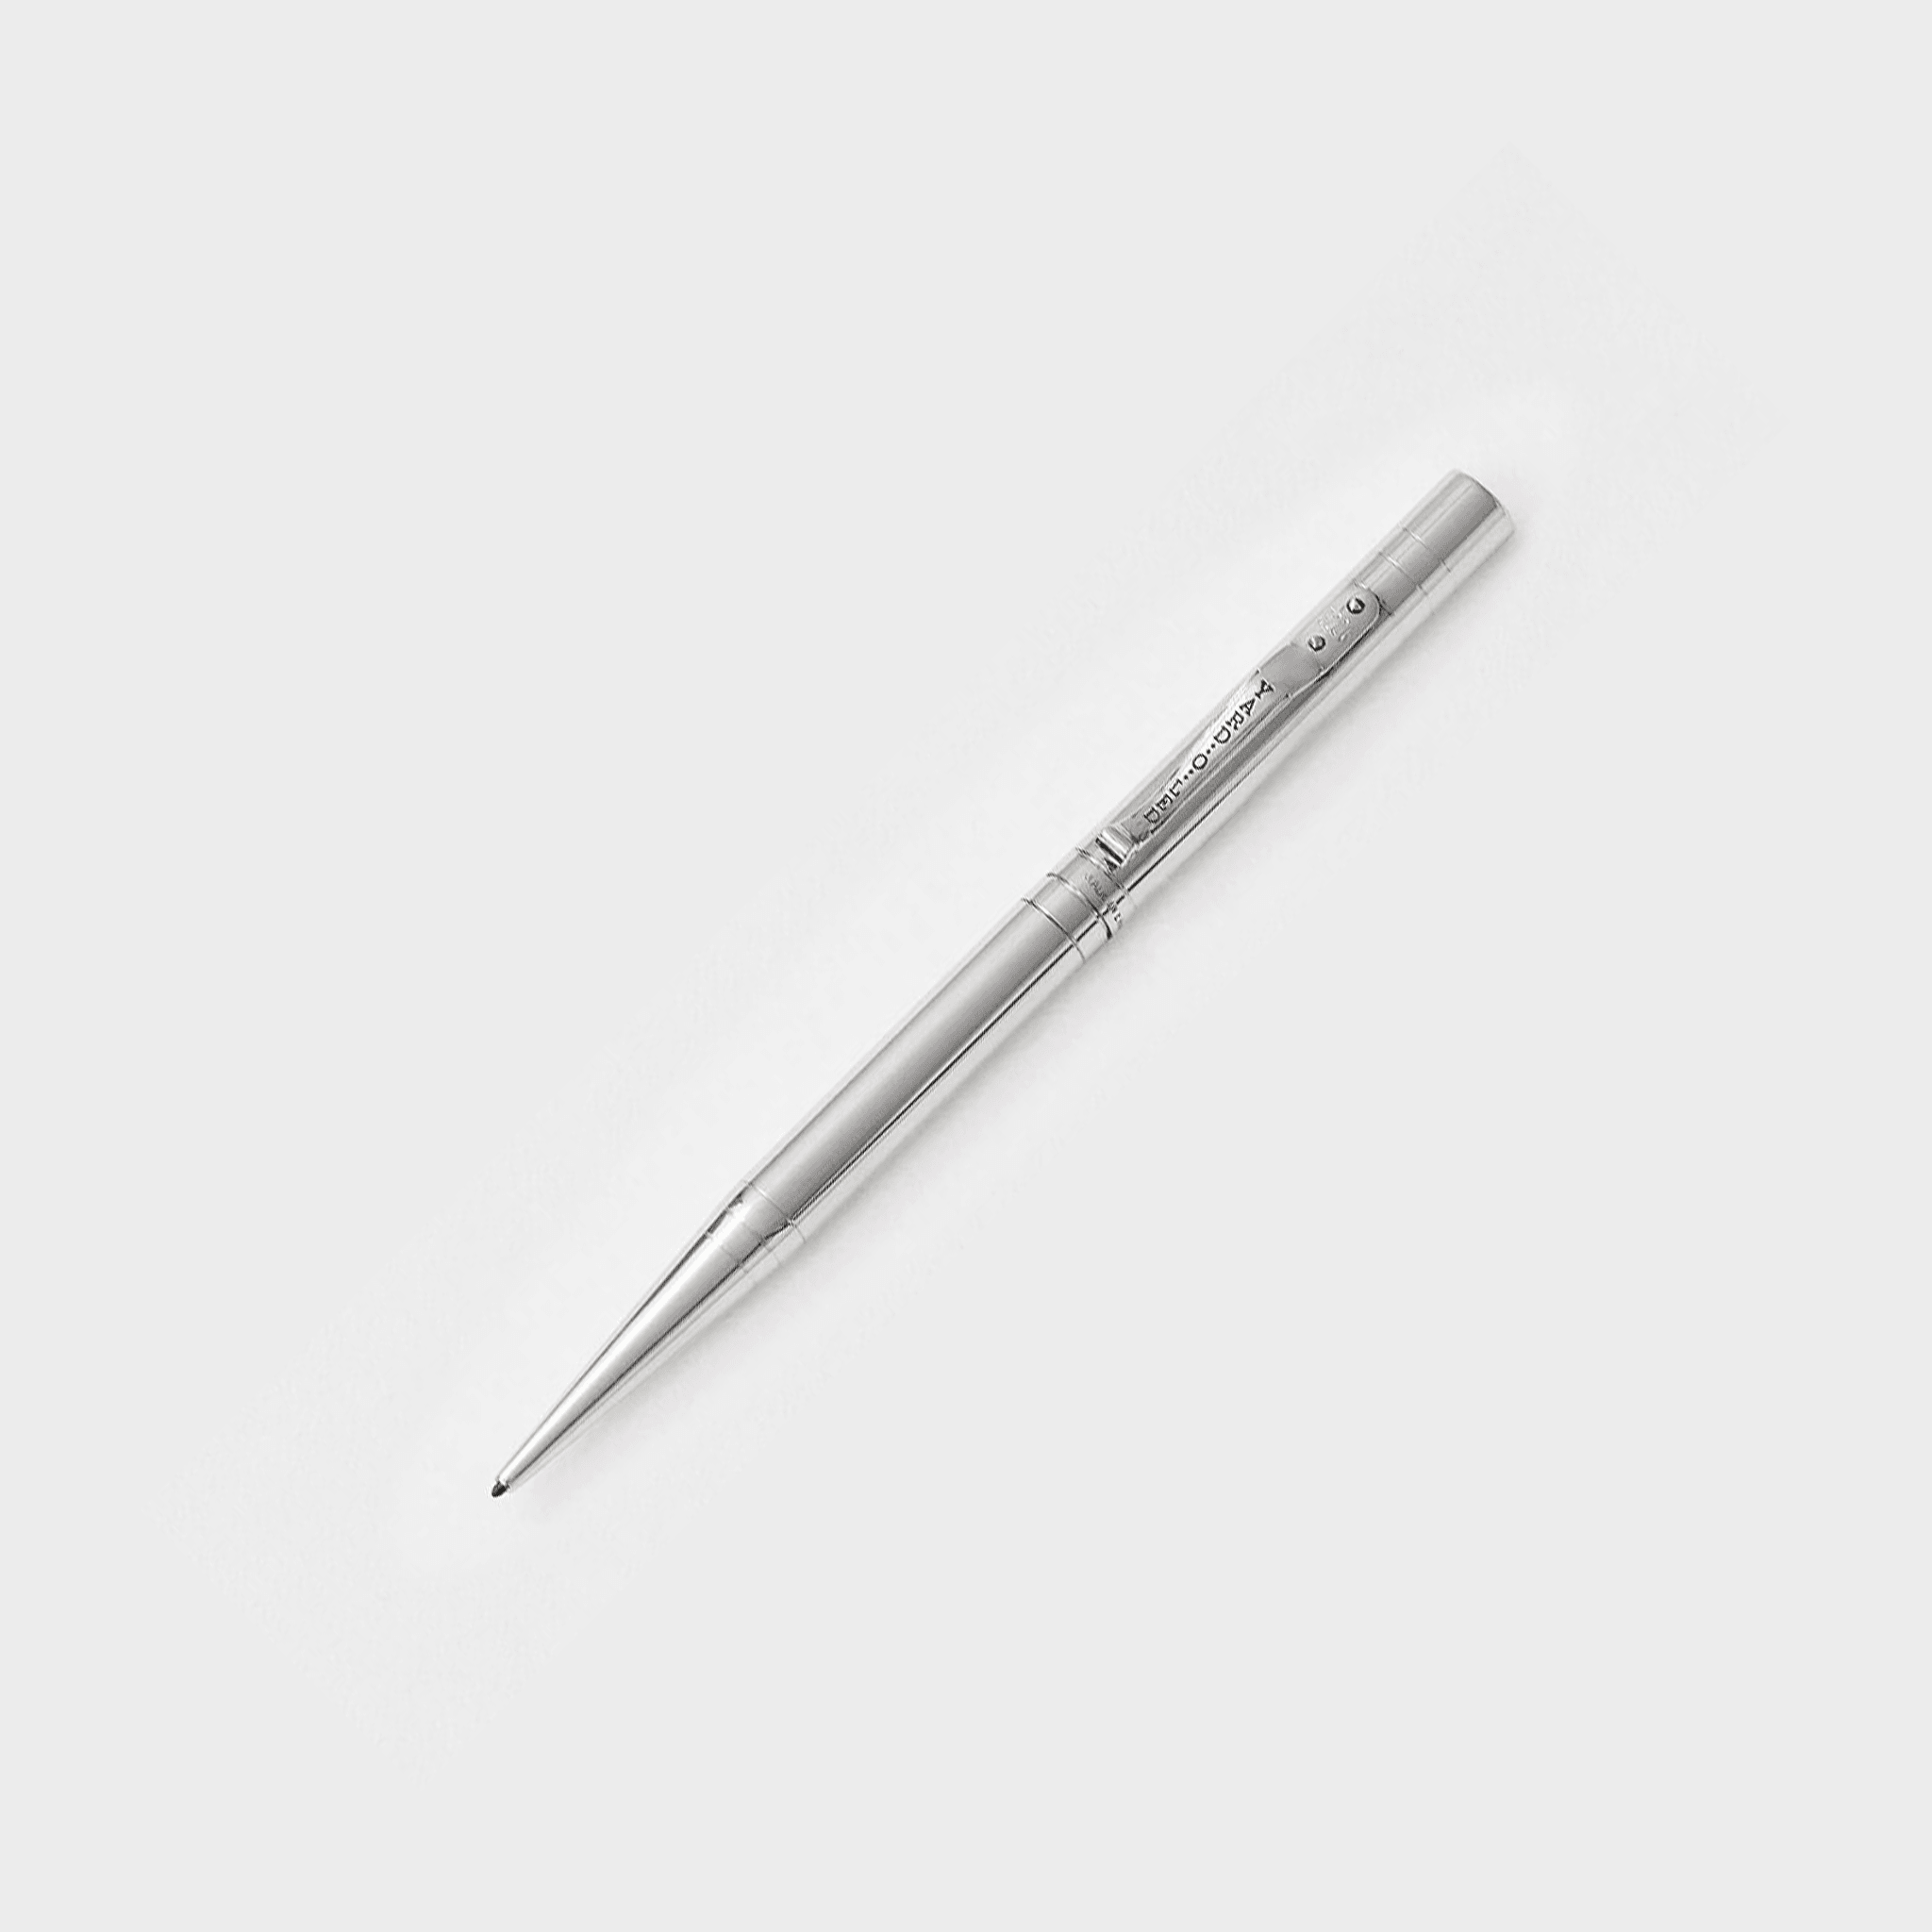 Yard-O-Led Viceroy Standard Plain Mechanical Pencil - Laywine's